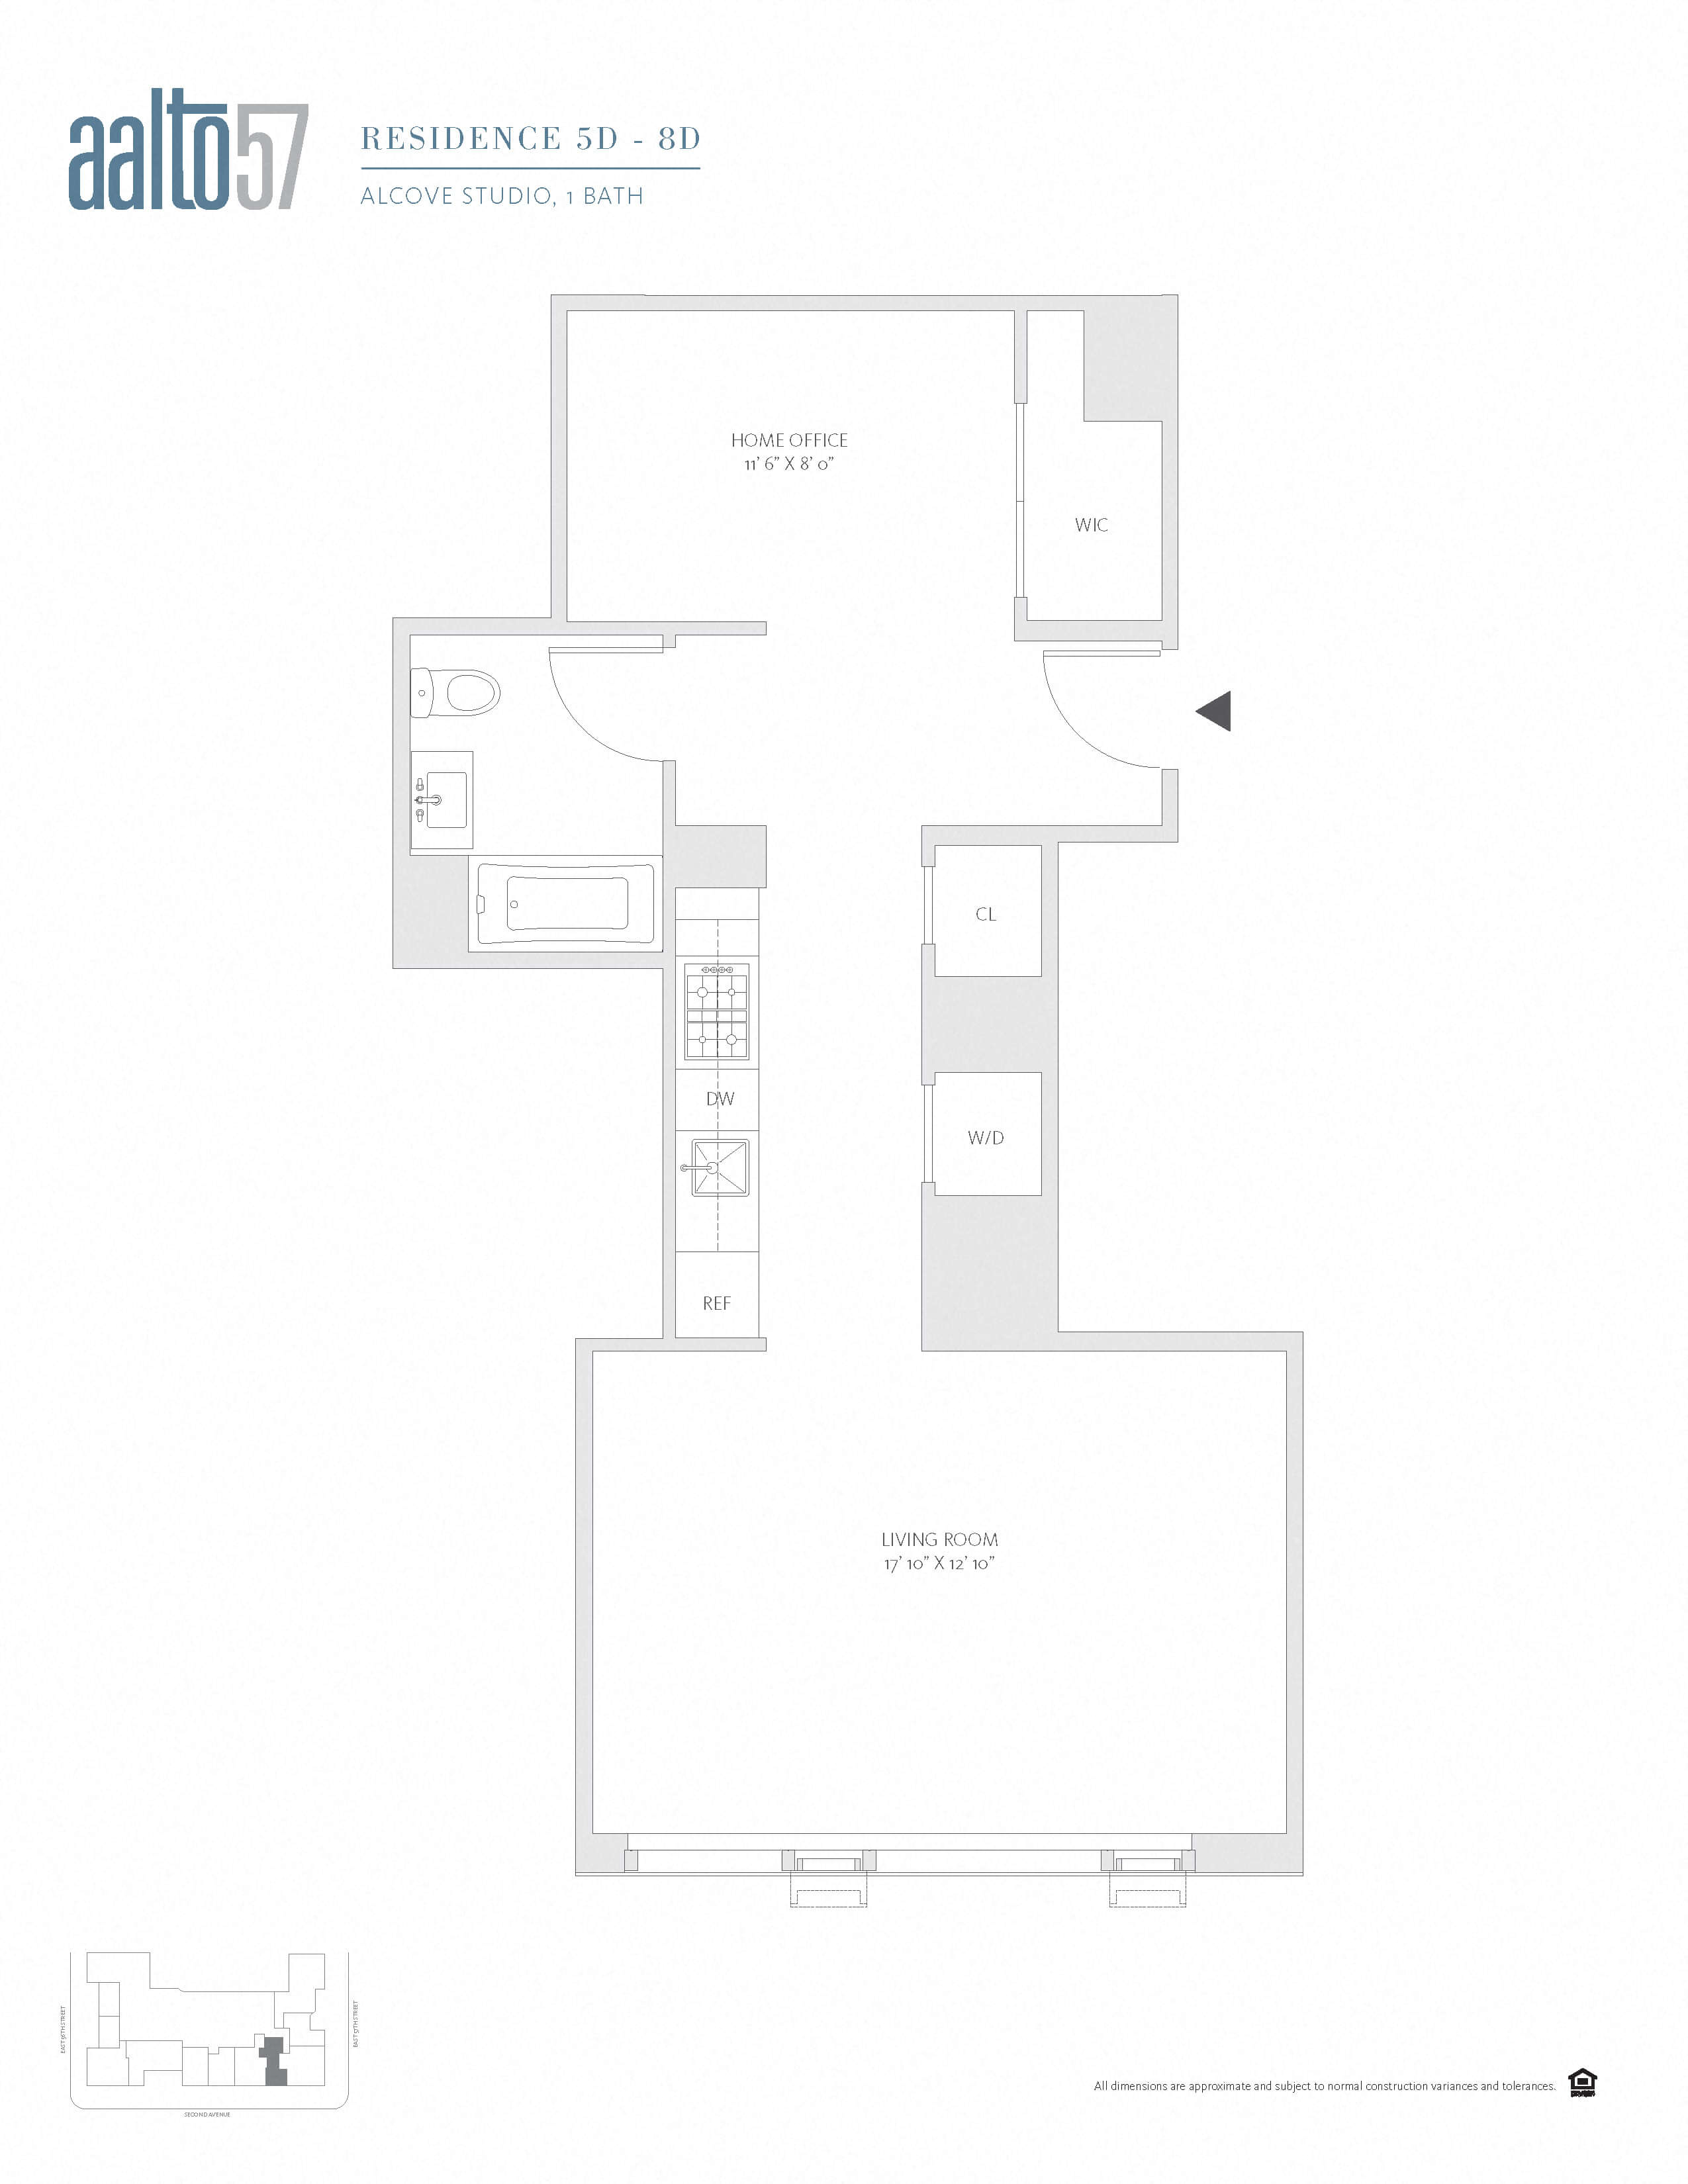 Apartment 08D floorplan